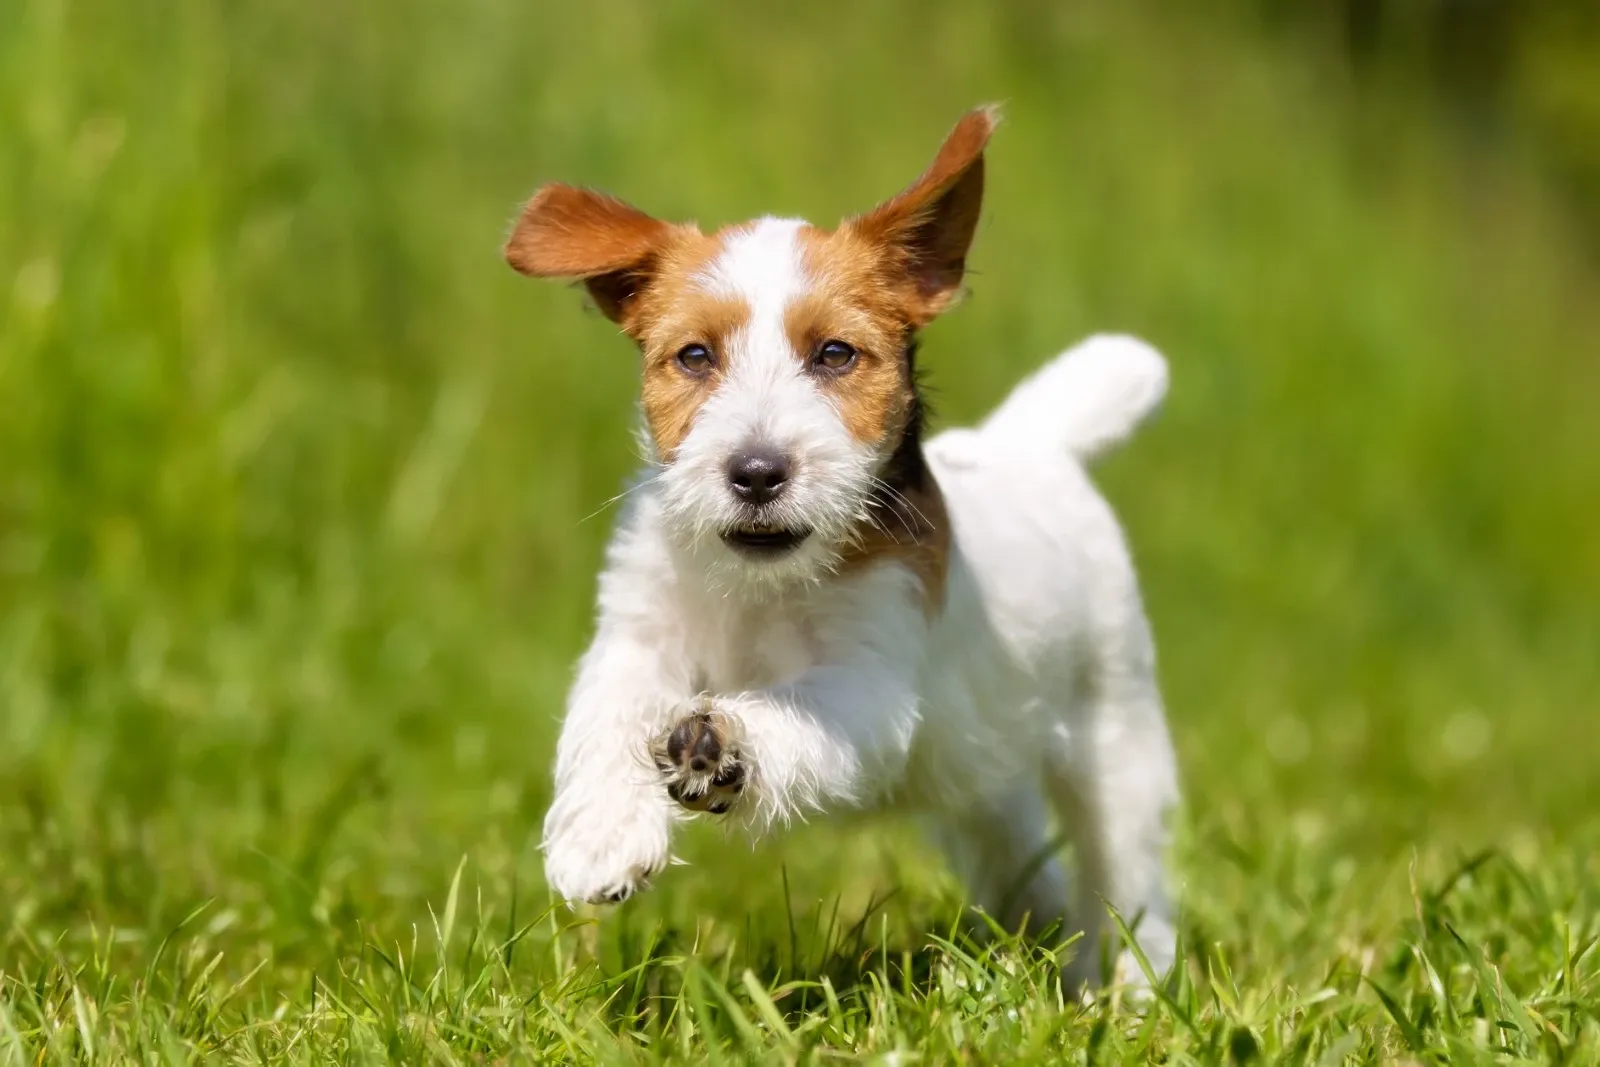 russell terrier - lille hund med stort aktivitetsniveau